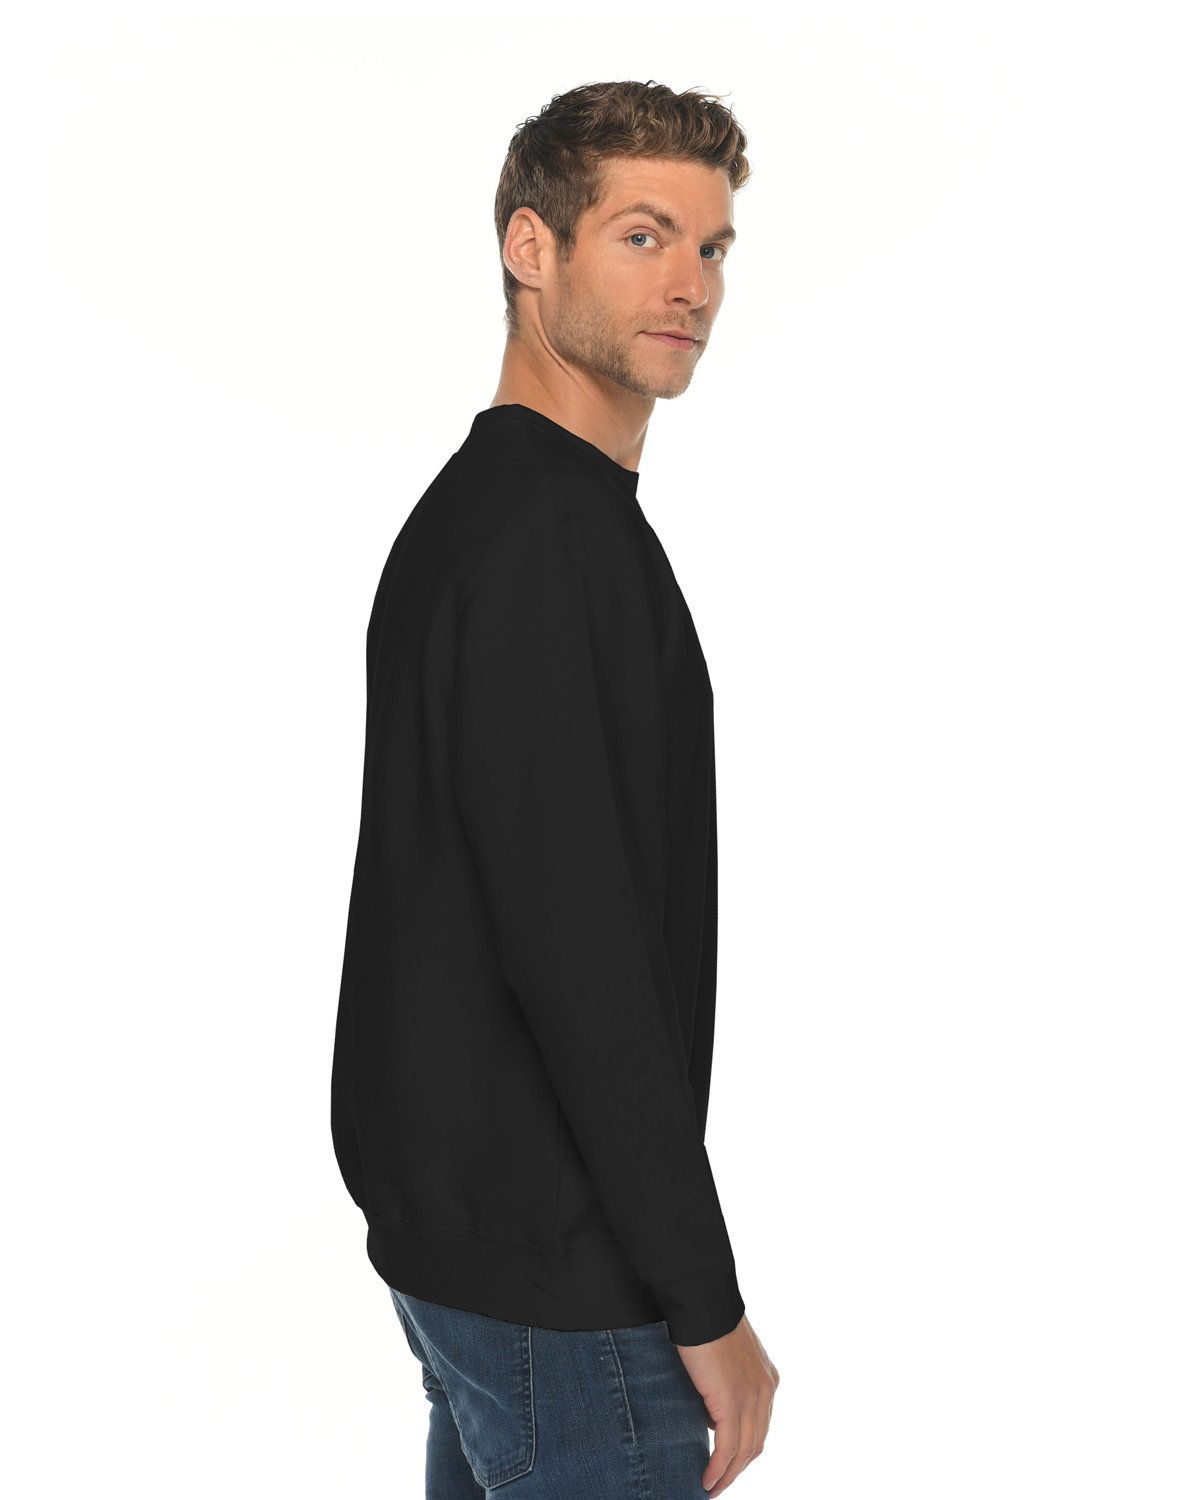 'Lane Seven LS14004 Unisex Premium Crewneck Sweatshirt'